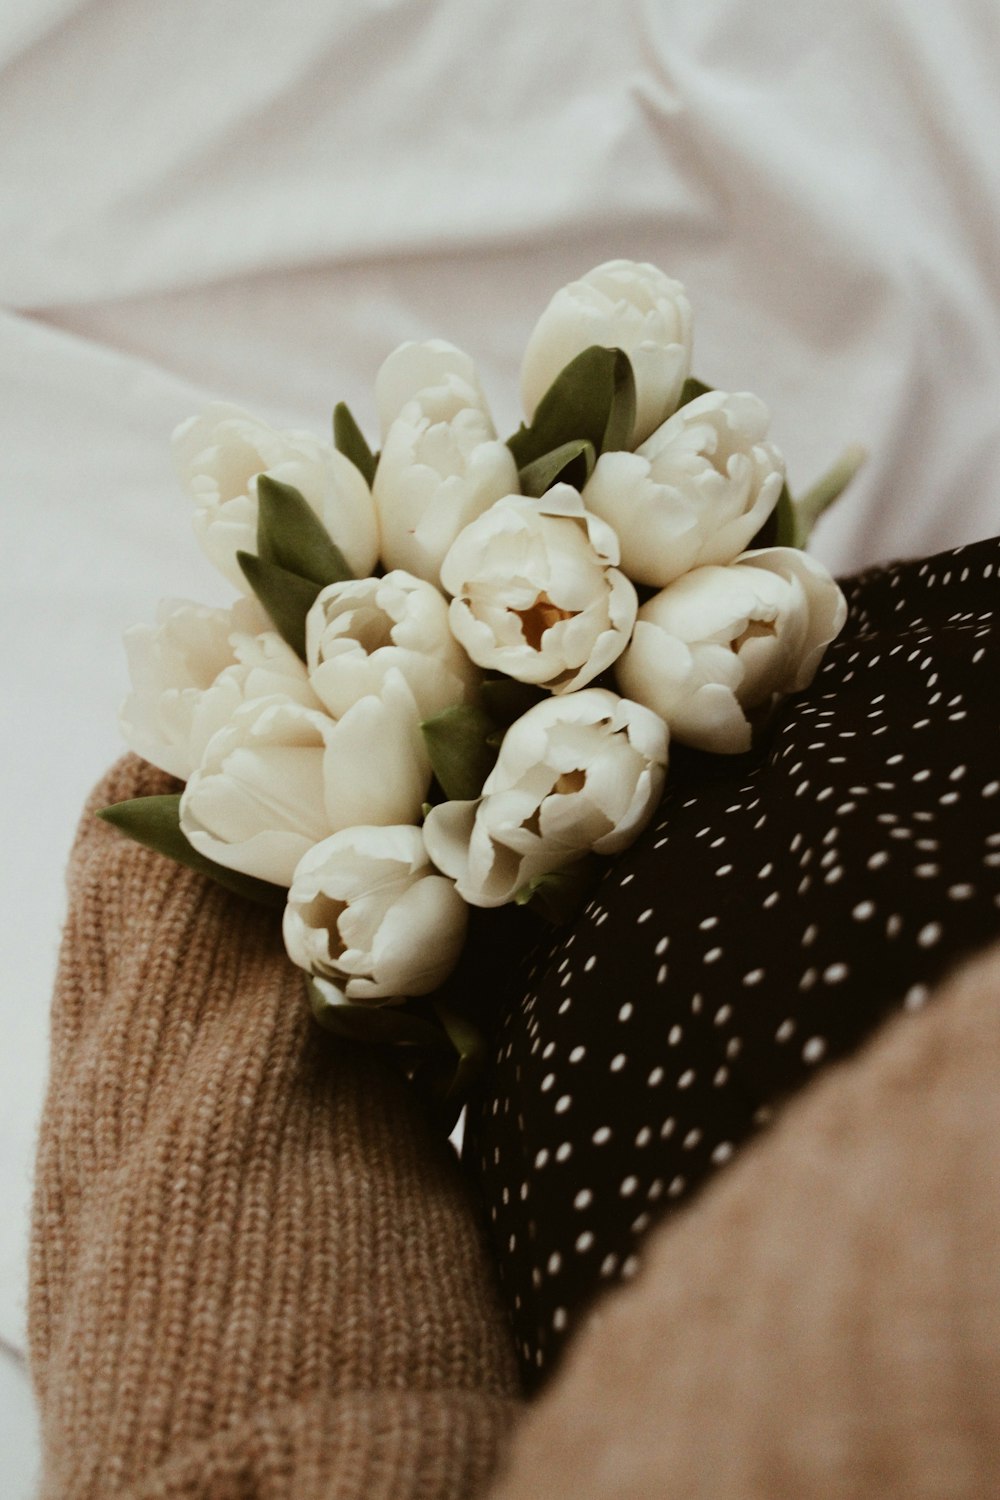 white flowers on black and white polka dot textile